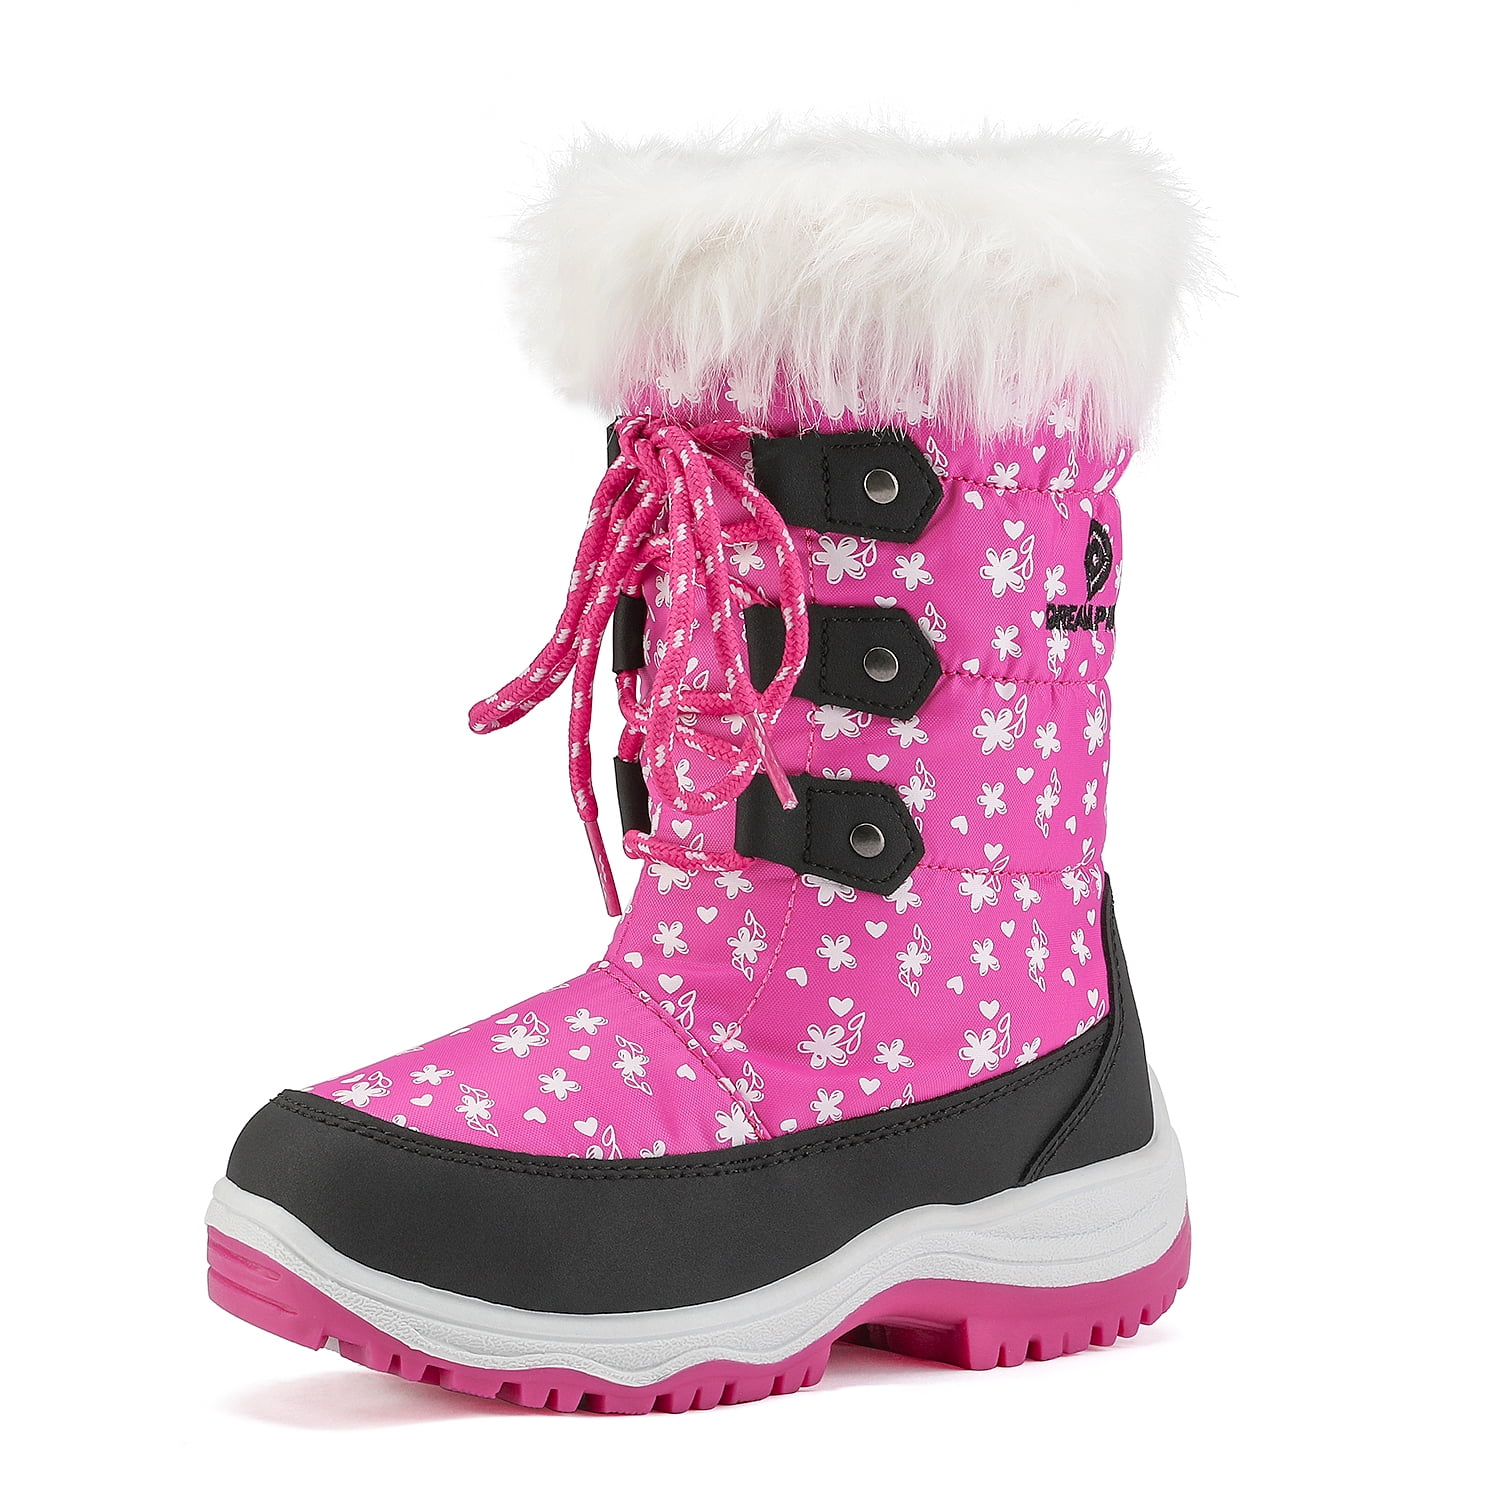 DREAM PAIRS Boys Girls Nordic Knee High Winter Snow Boots 